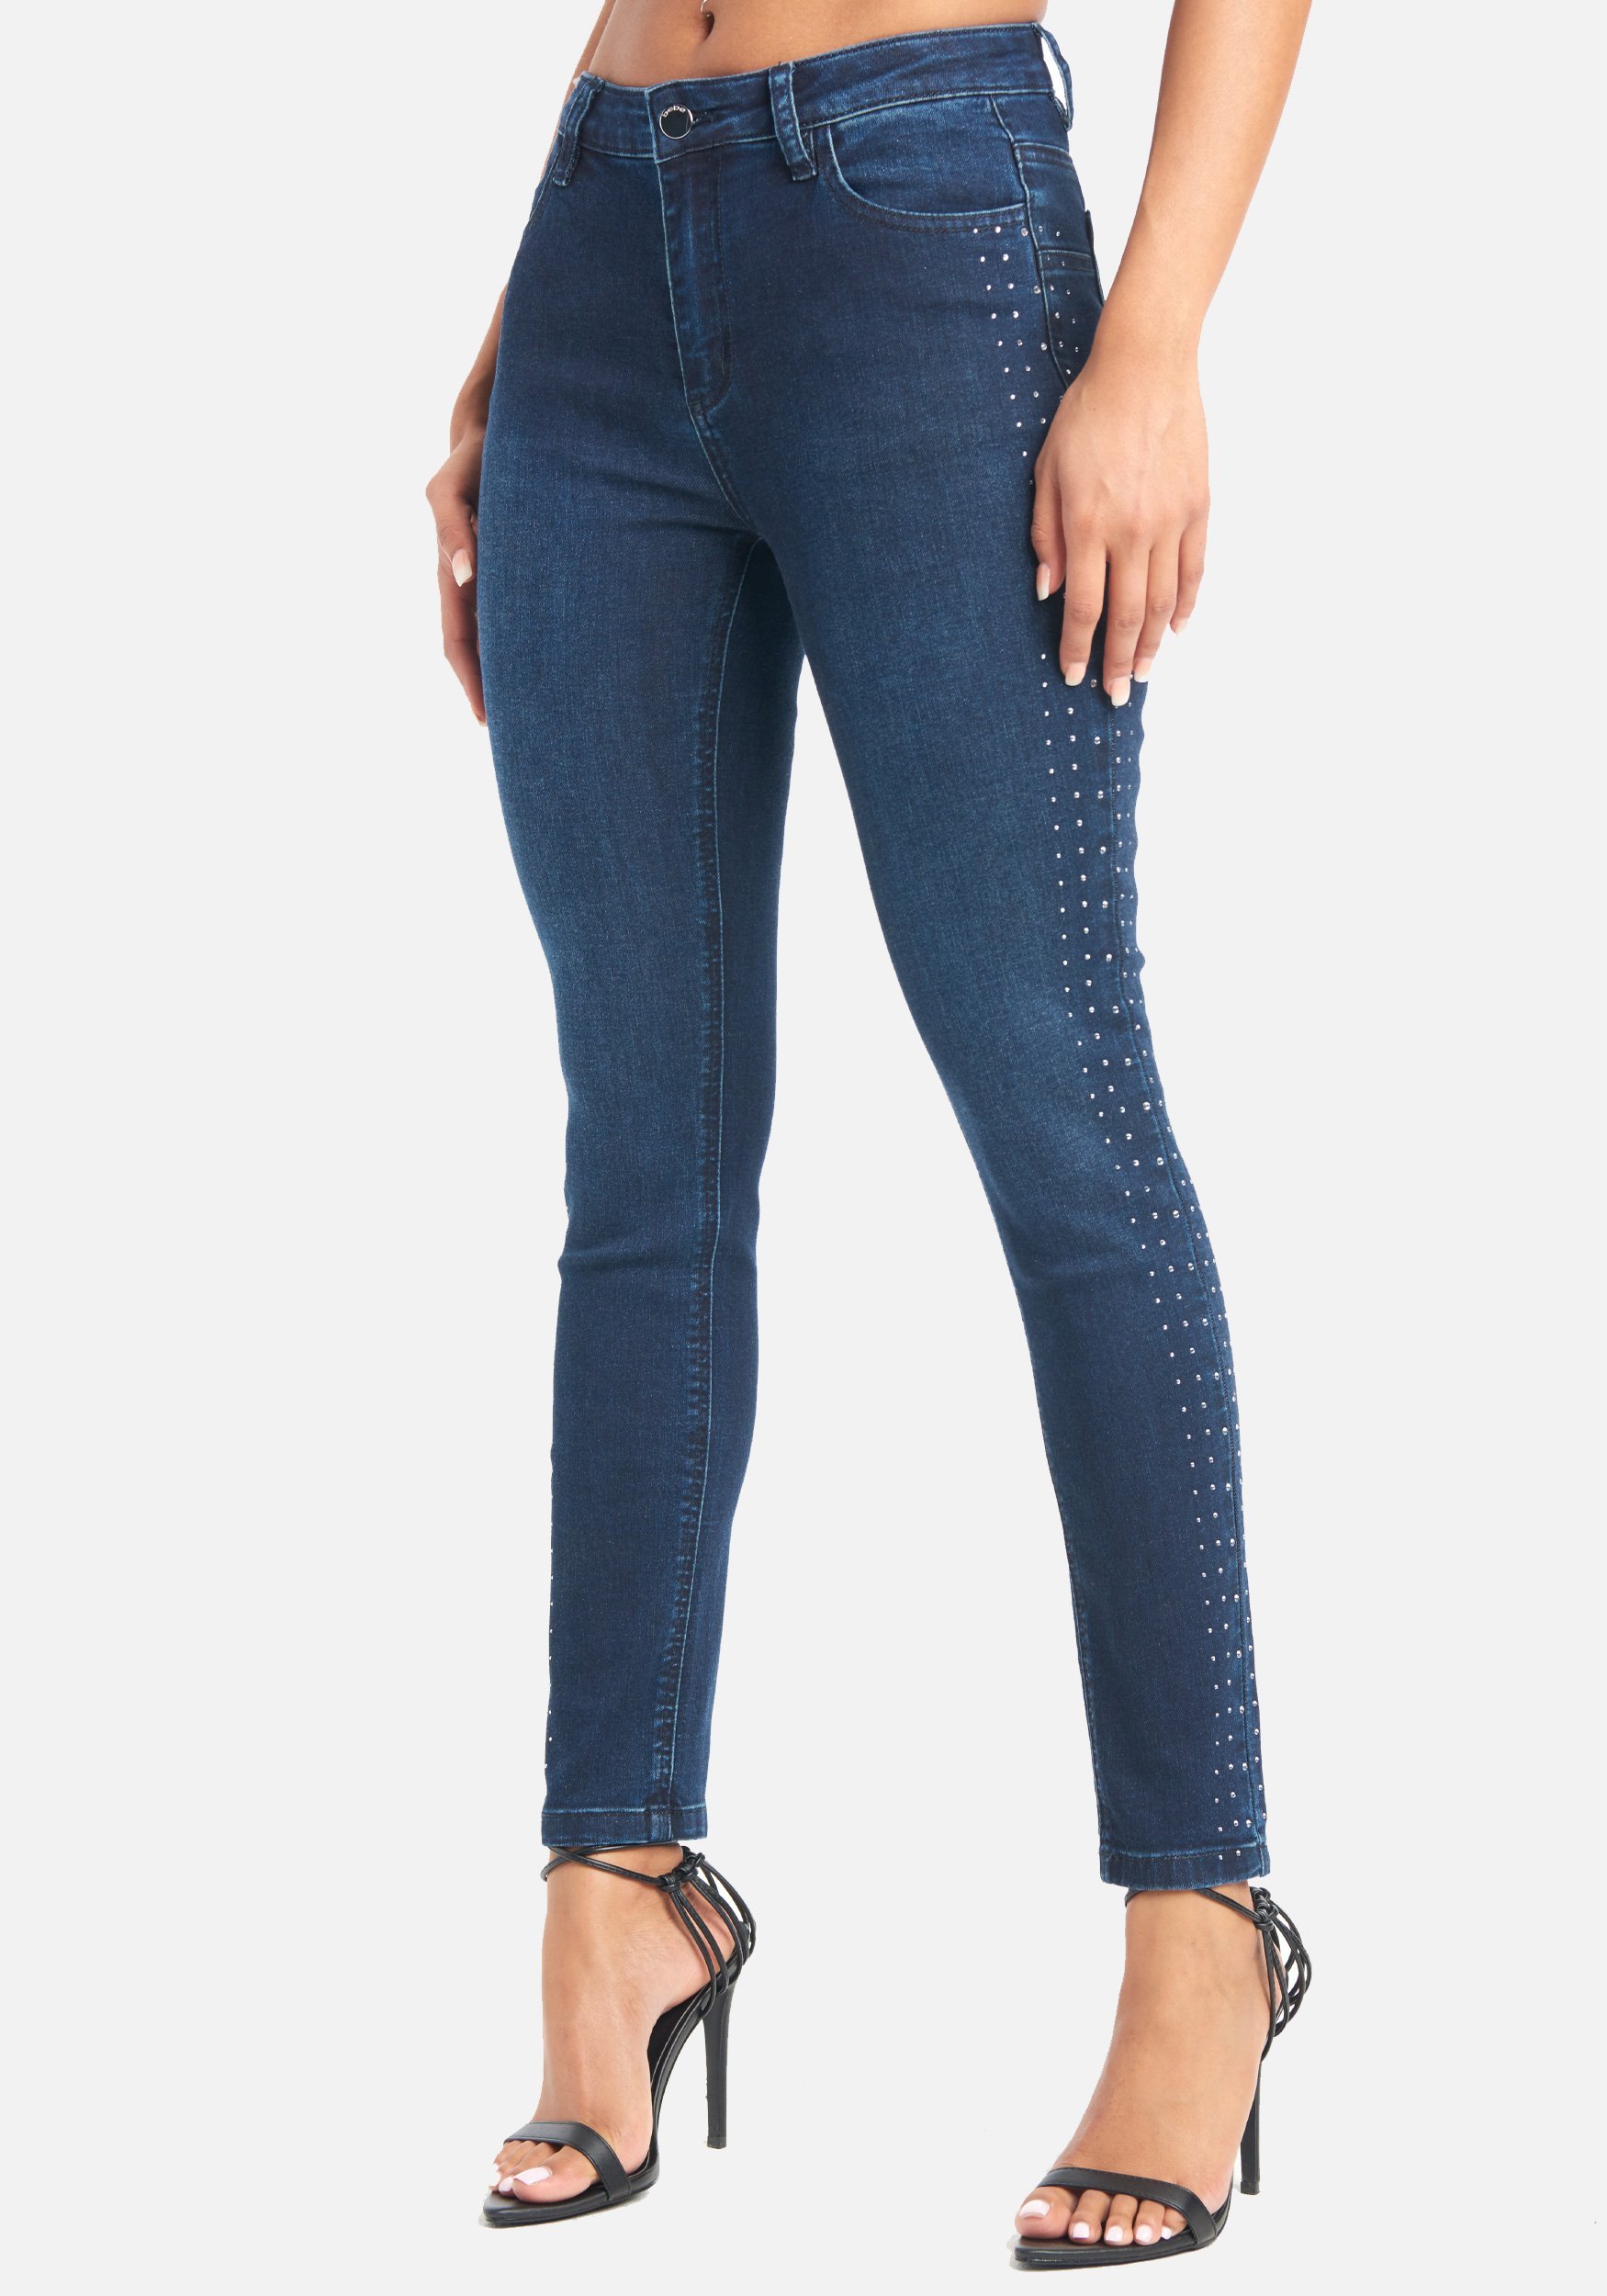 Women's Bebe Embelished Heat Seal Jeans, Size 27 in Dark Indigo Wash Cotton/Spandex